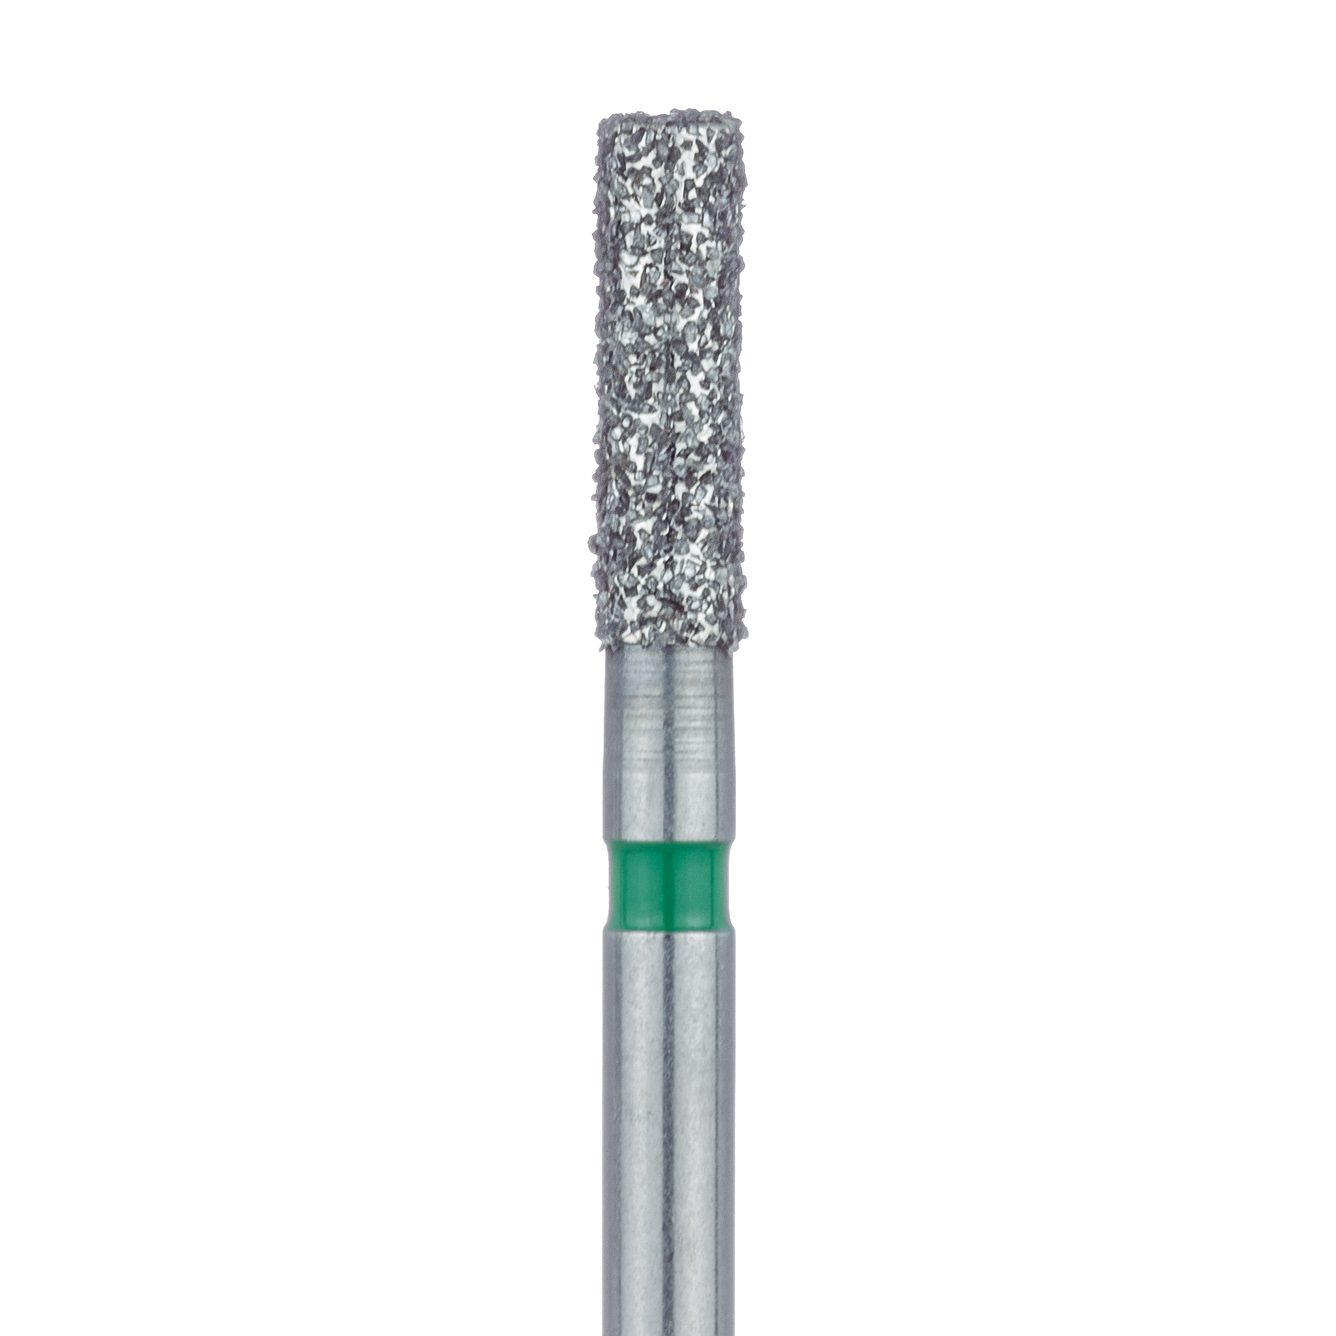 837G-018-FG Long Cylinder Diamond Bur, 1.8mm Ø, Coarse, FG